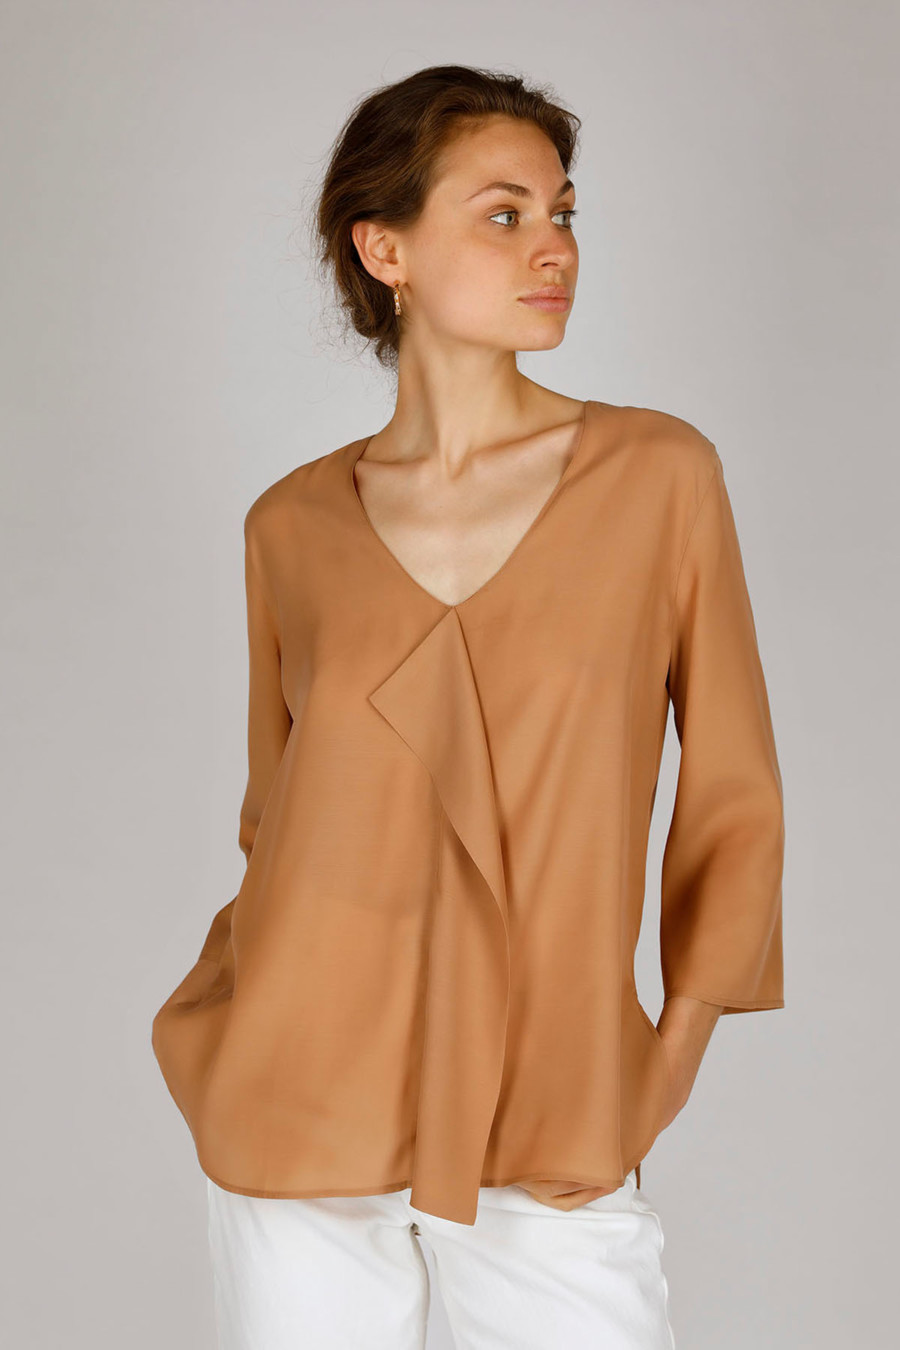 STELLA - V-neck blouse - colour: Caramel